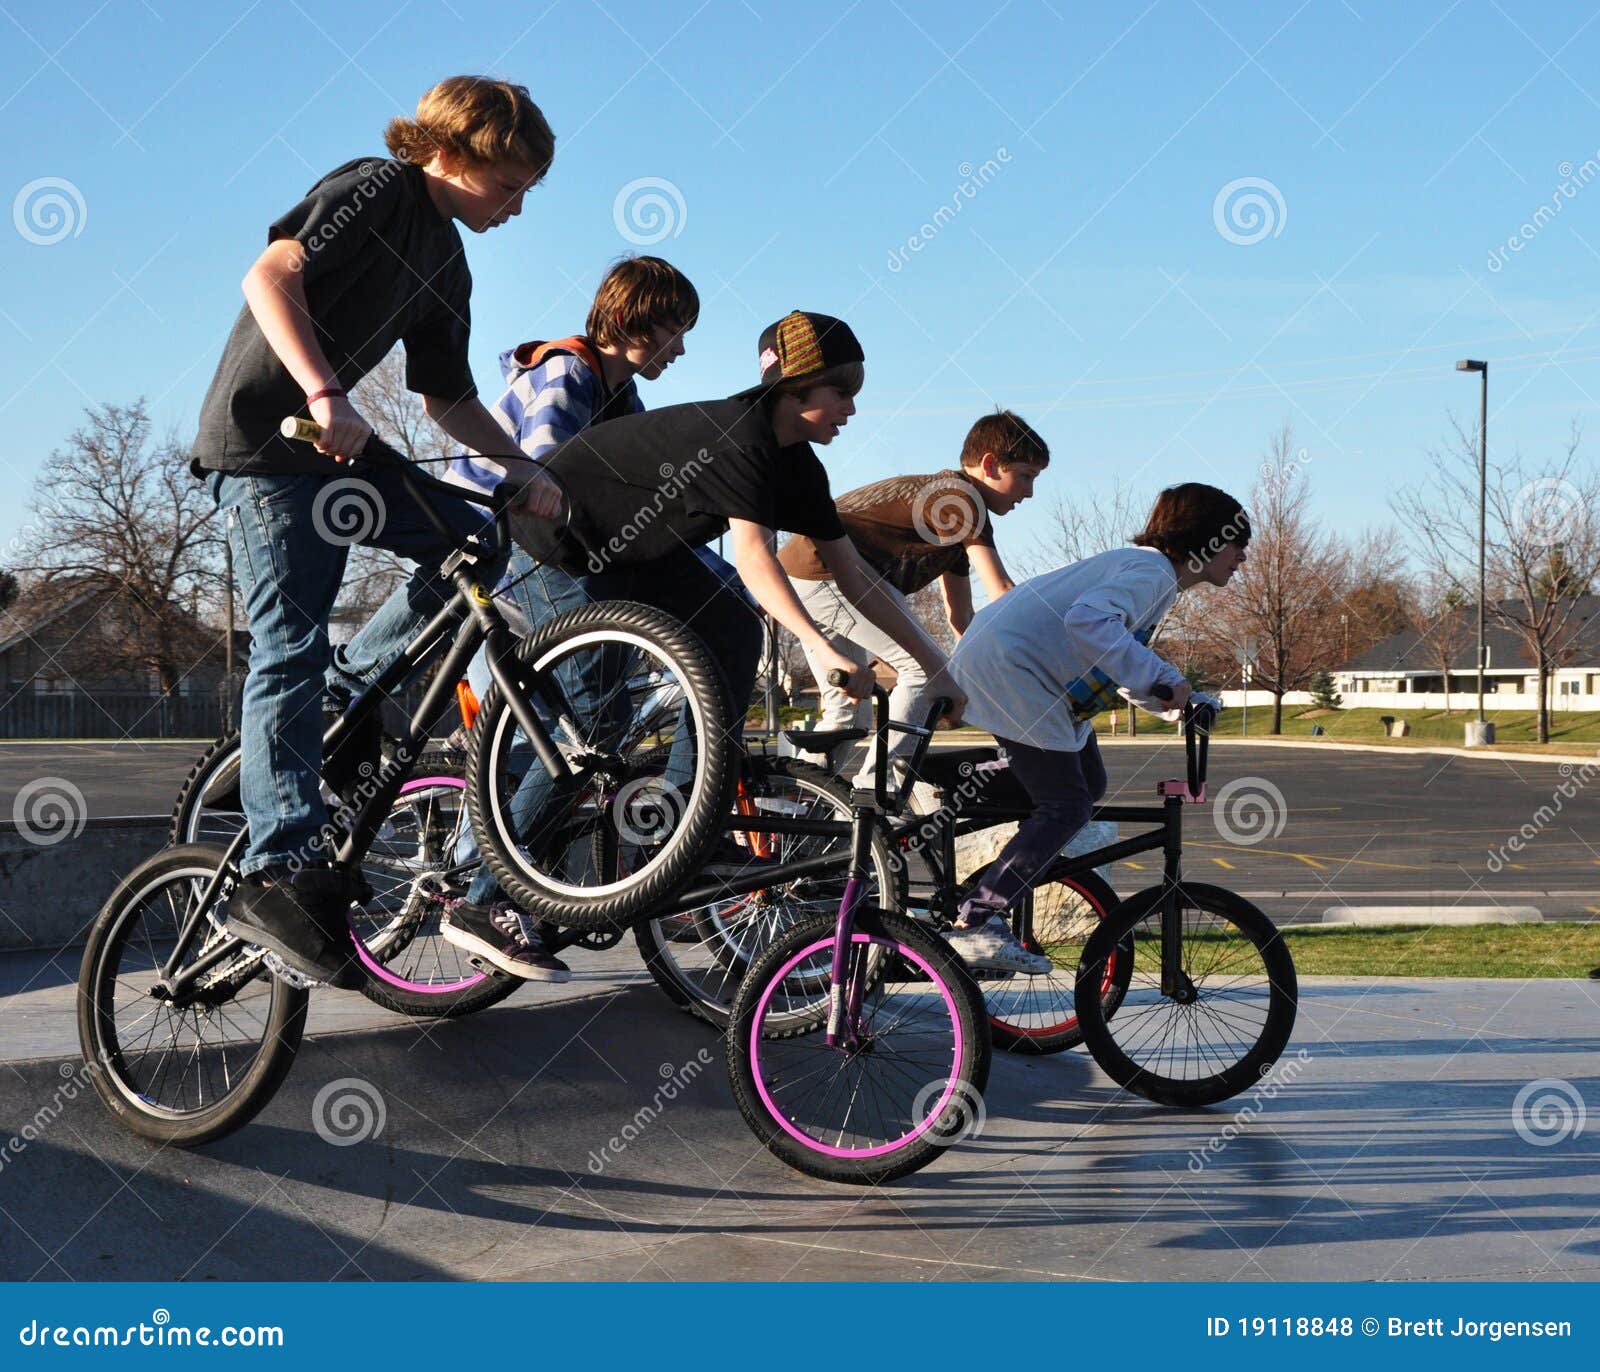 bmx bikes for teens